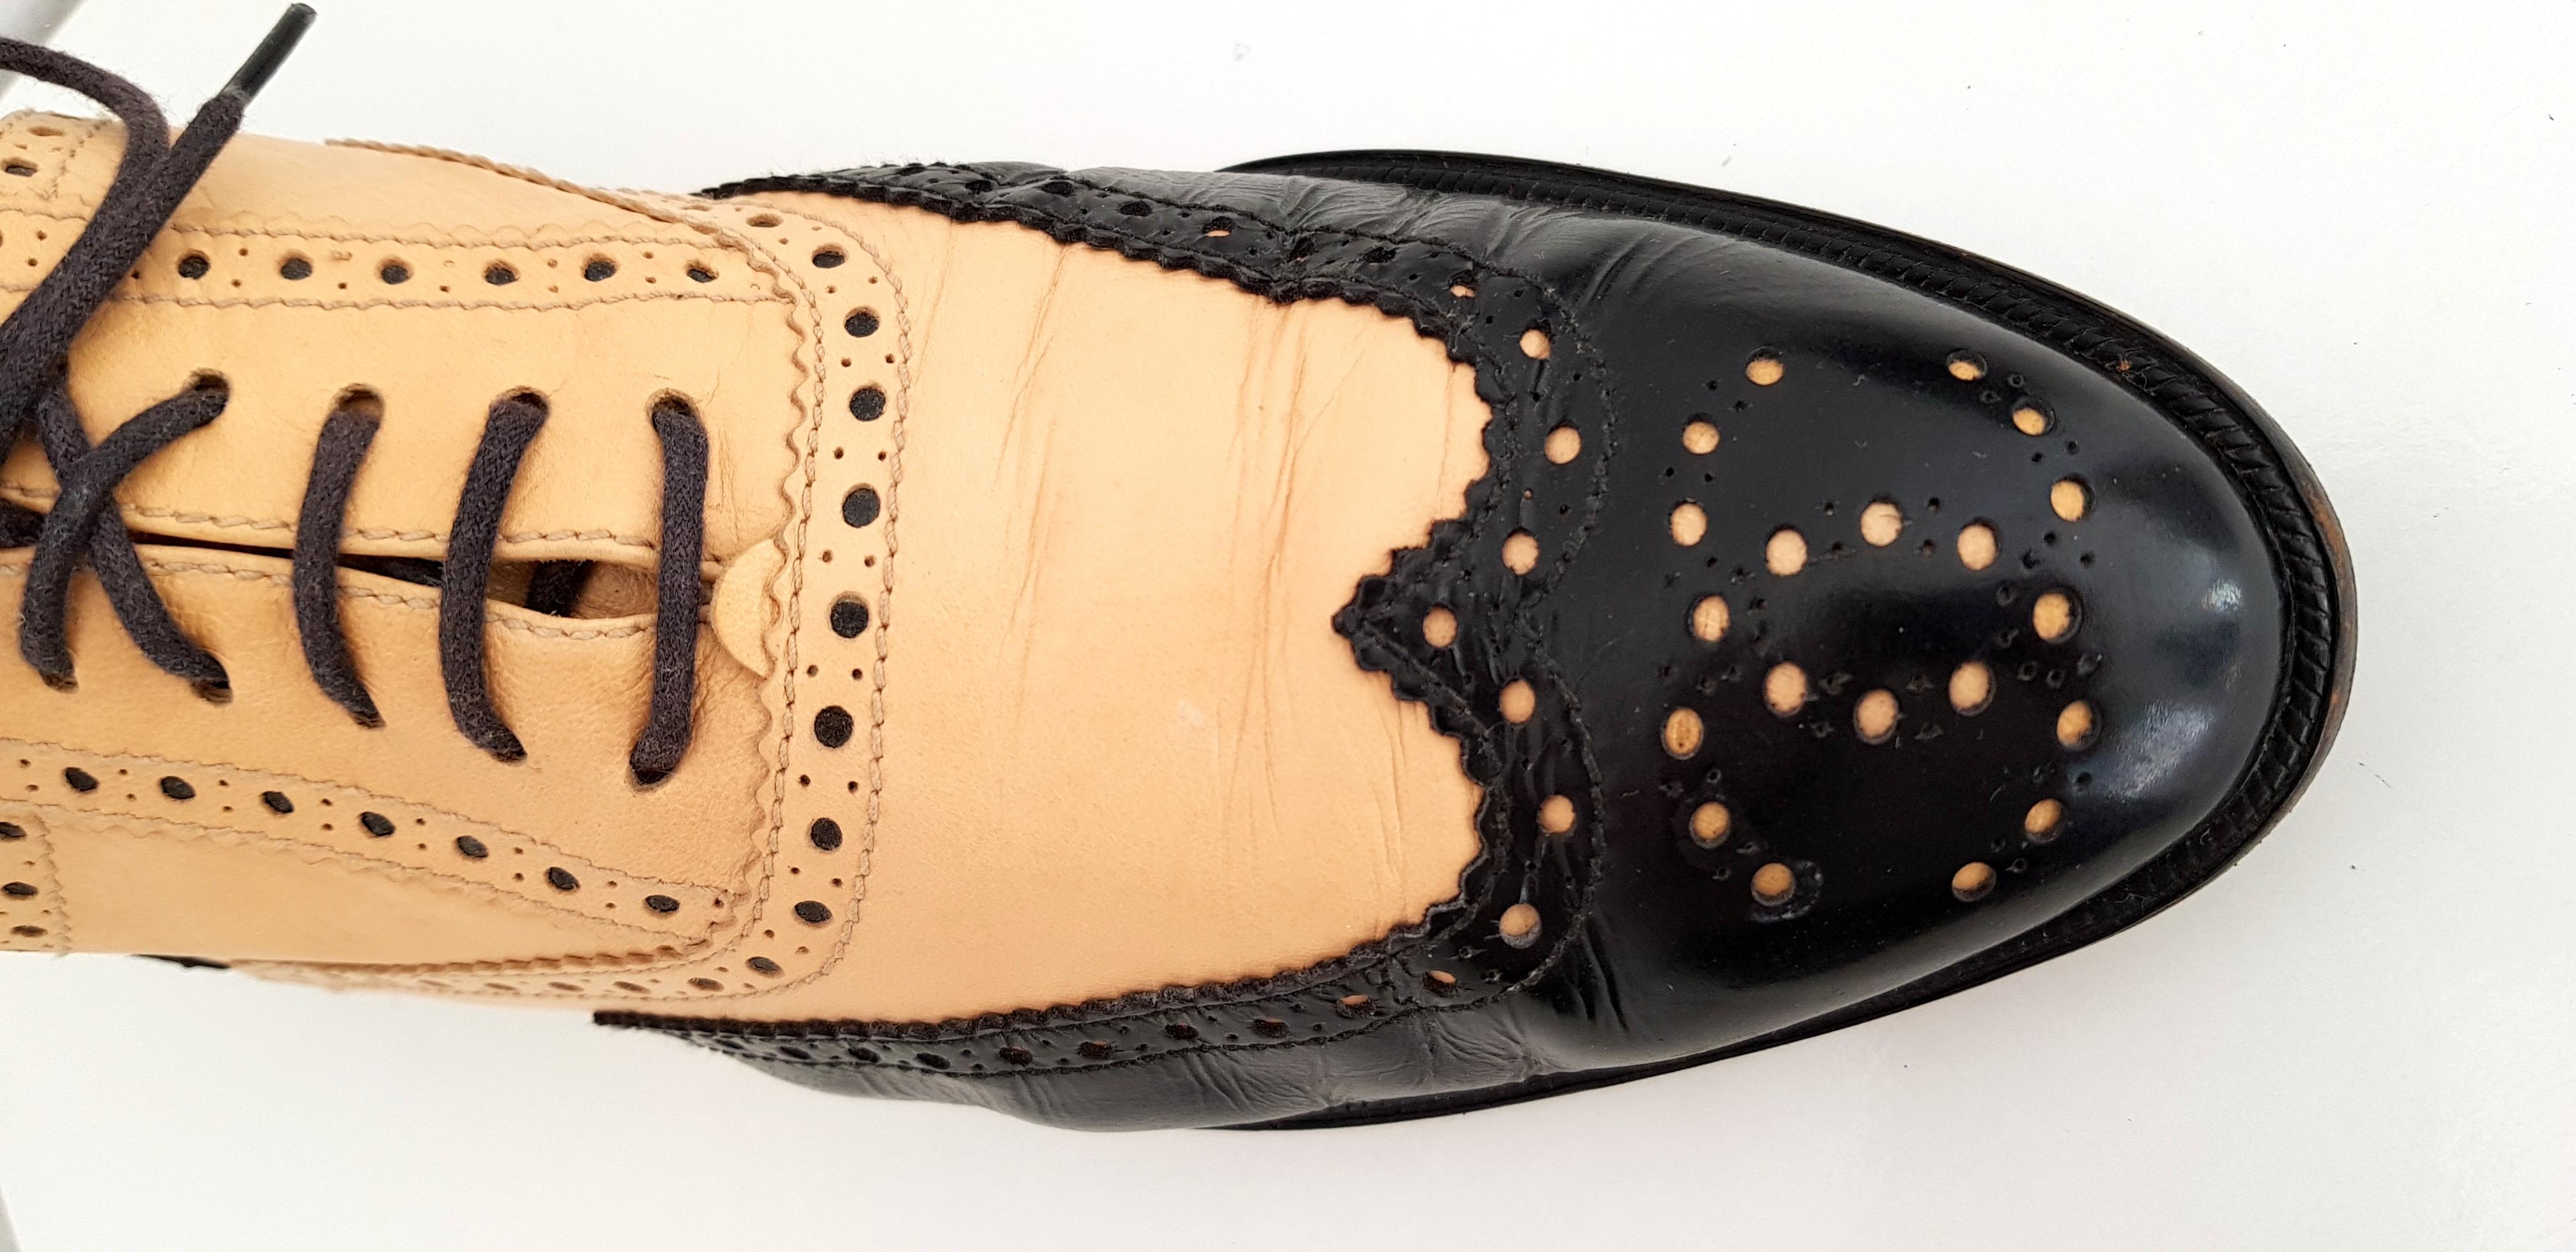 Chanel Bicolor Leather Lace-up Oxford Shoes - Size 40 (EU) 1